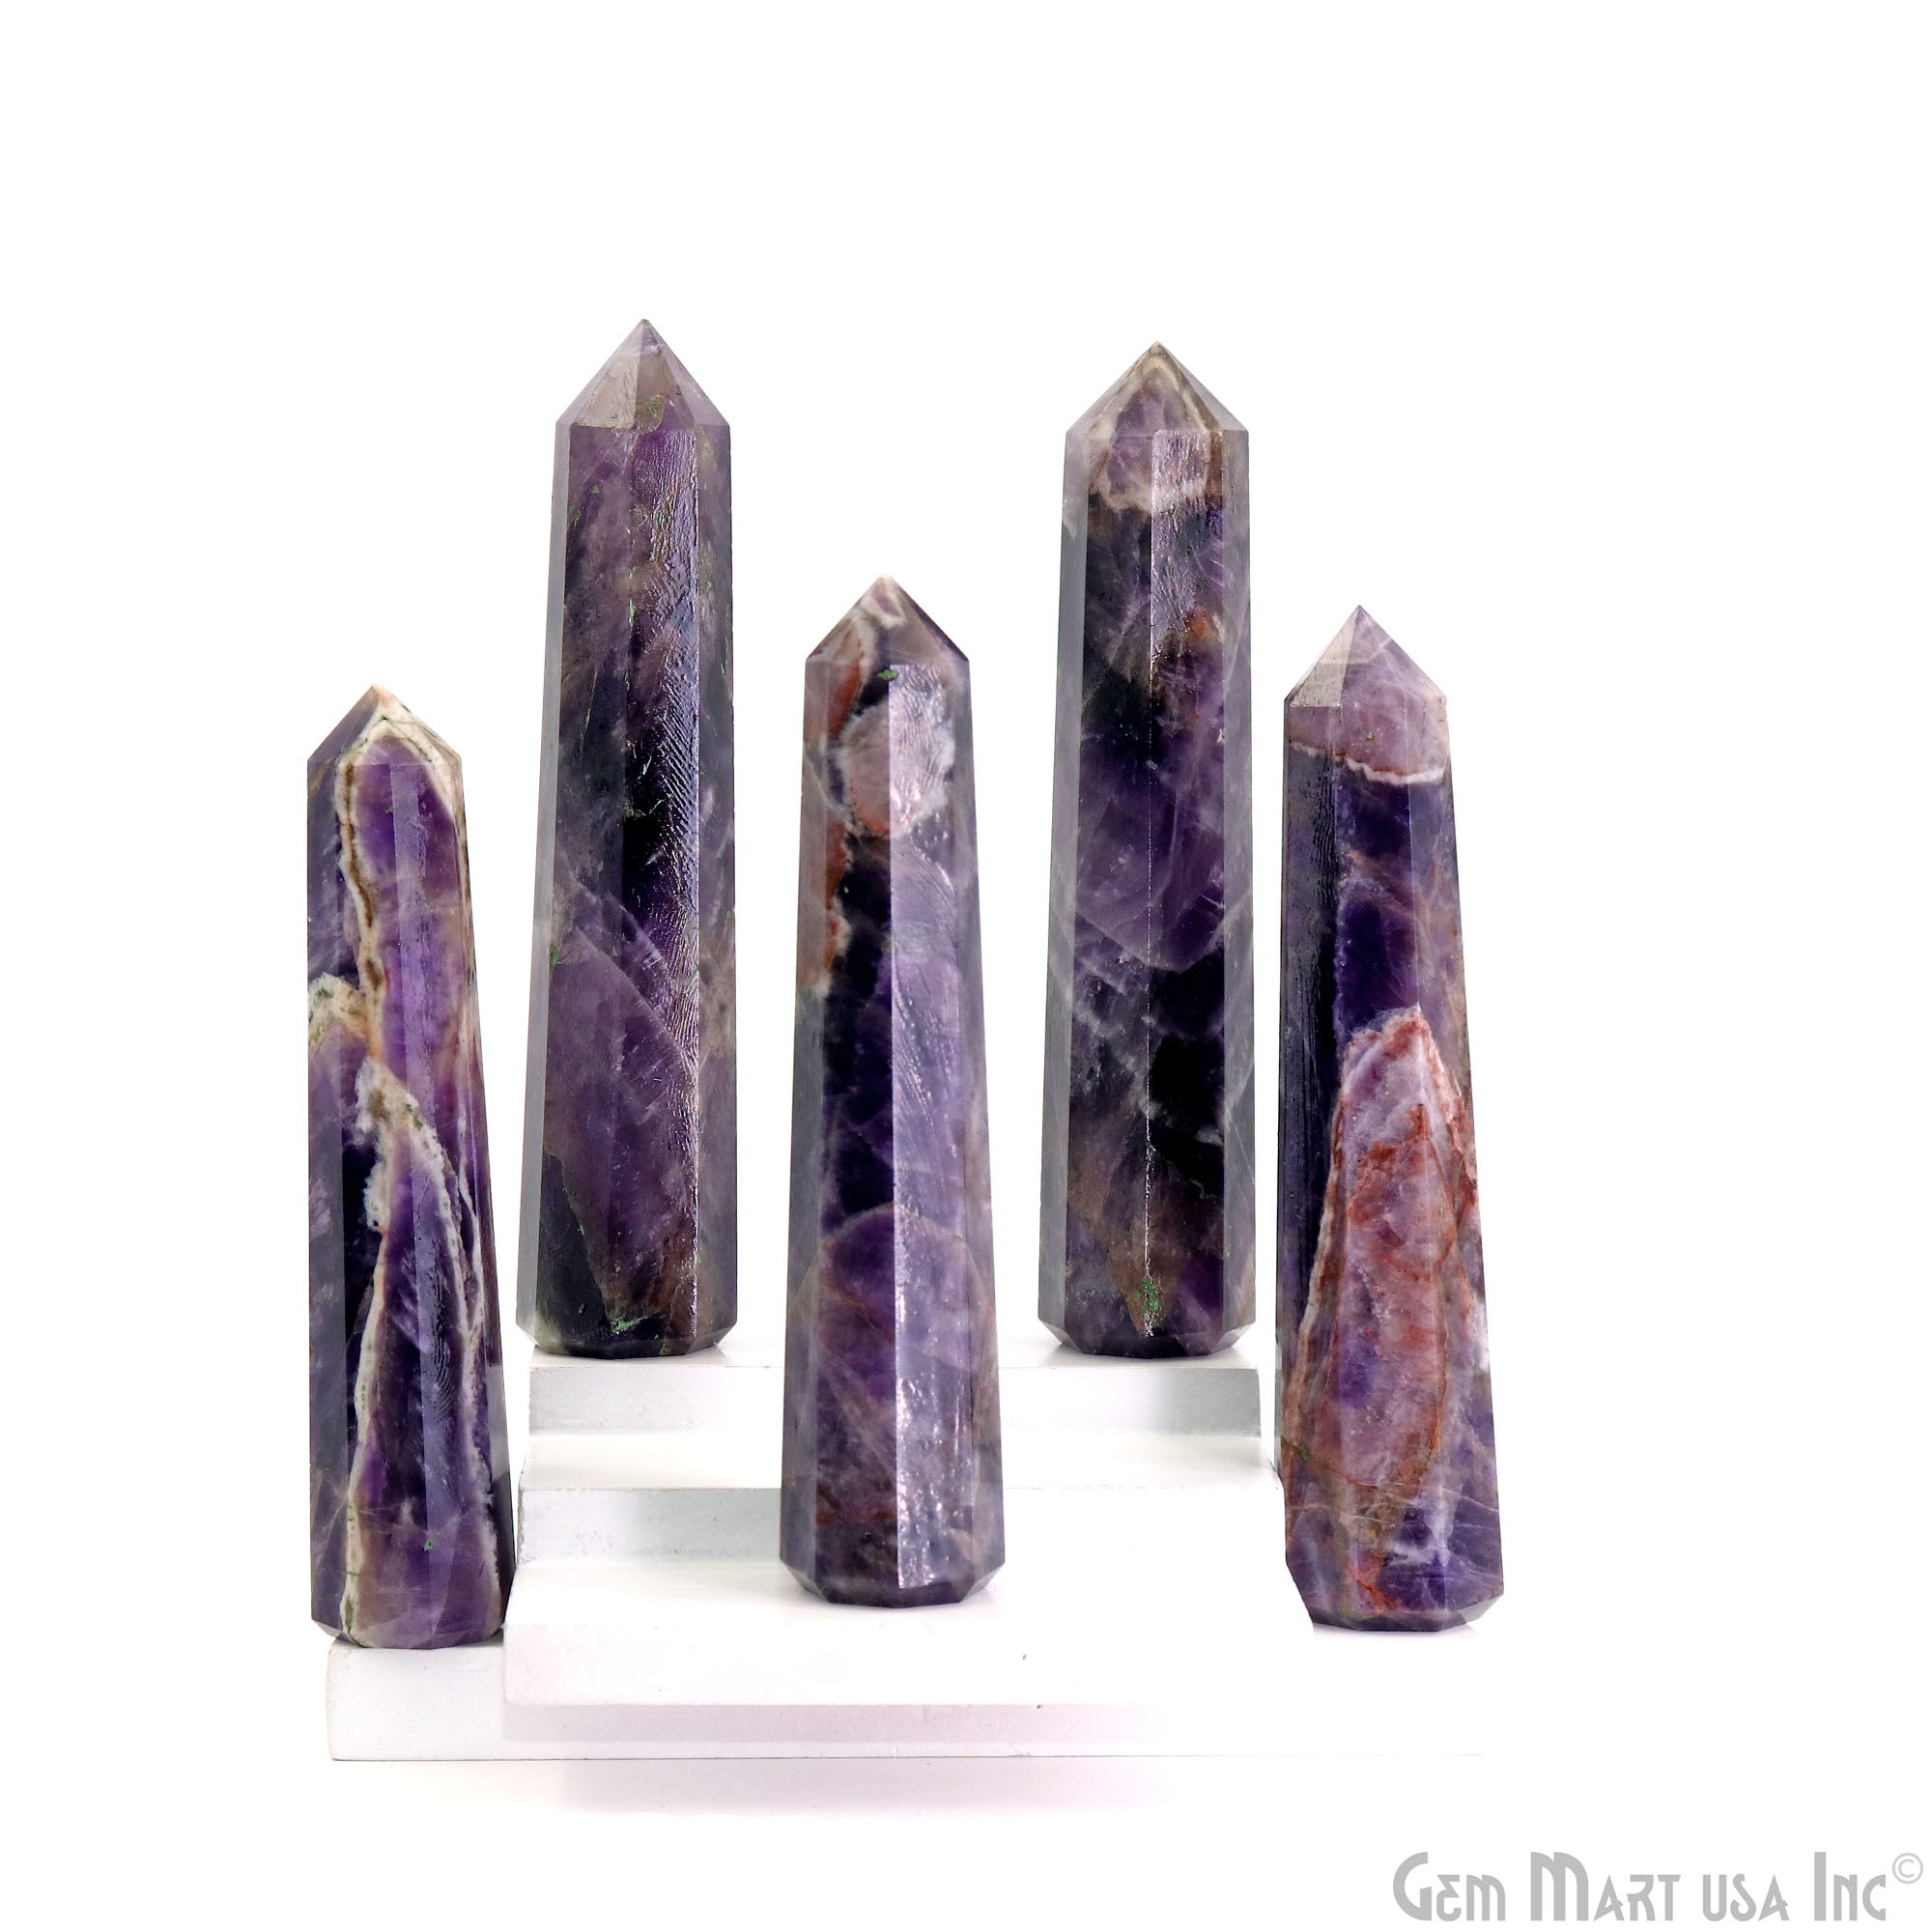 Amethyst Gemstone Jumbo Tower Crystal Tower Obelisk Healing Meditation Gemstones 4-5 Inch